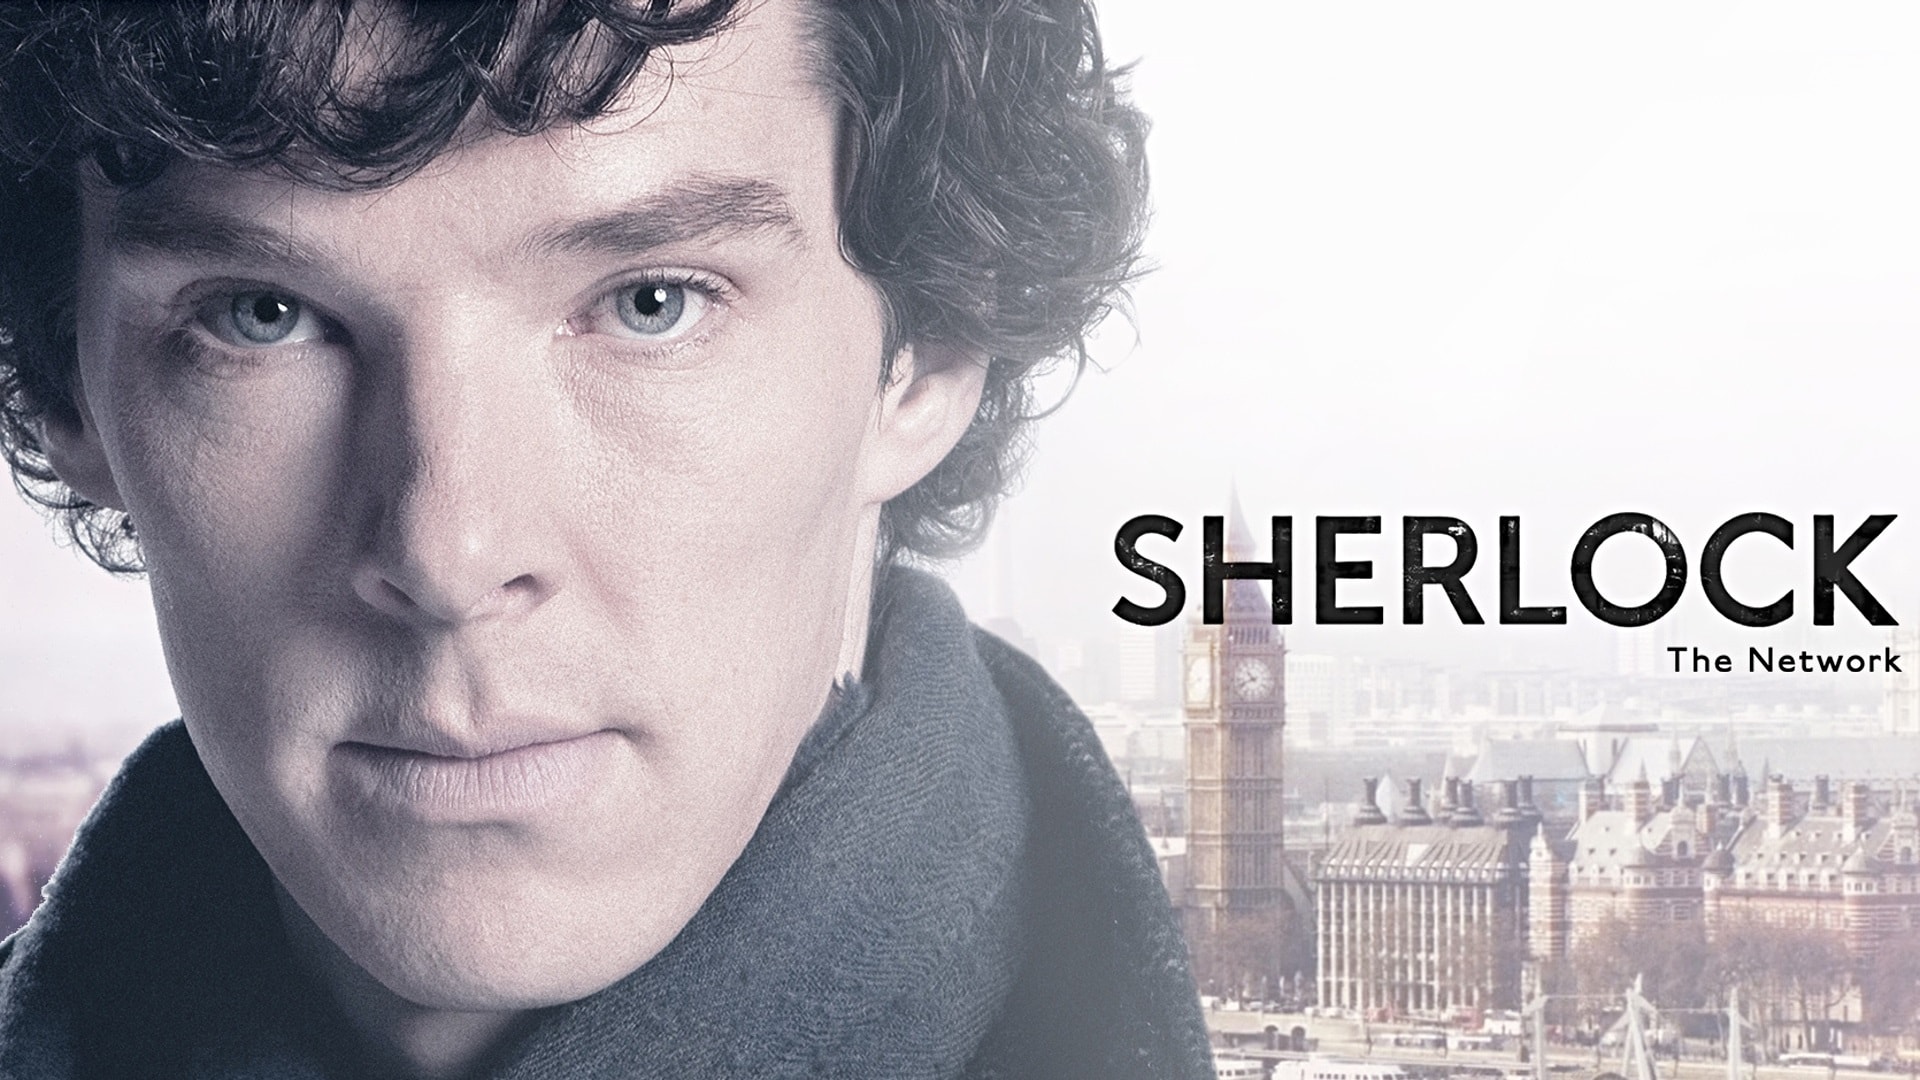 Логотип сериала Sherlock